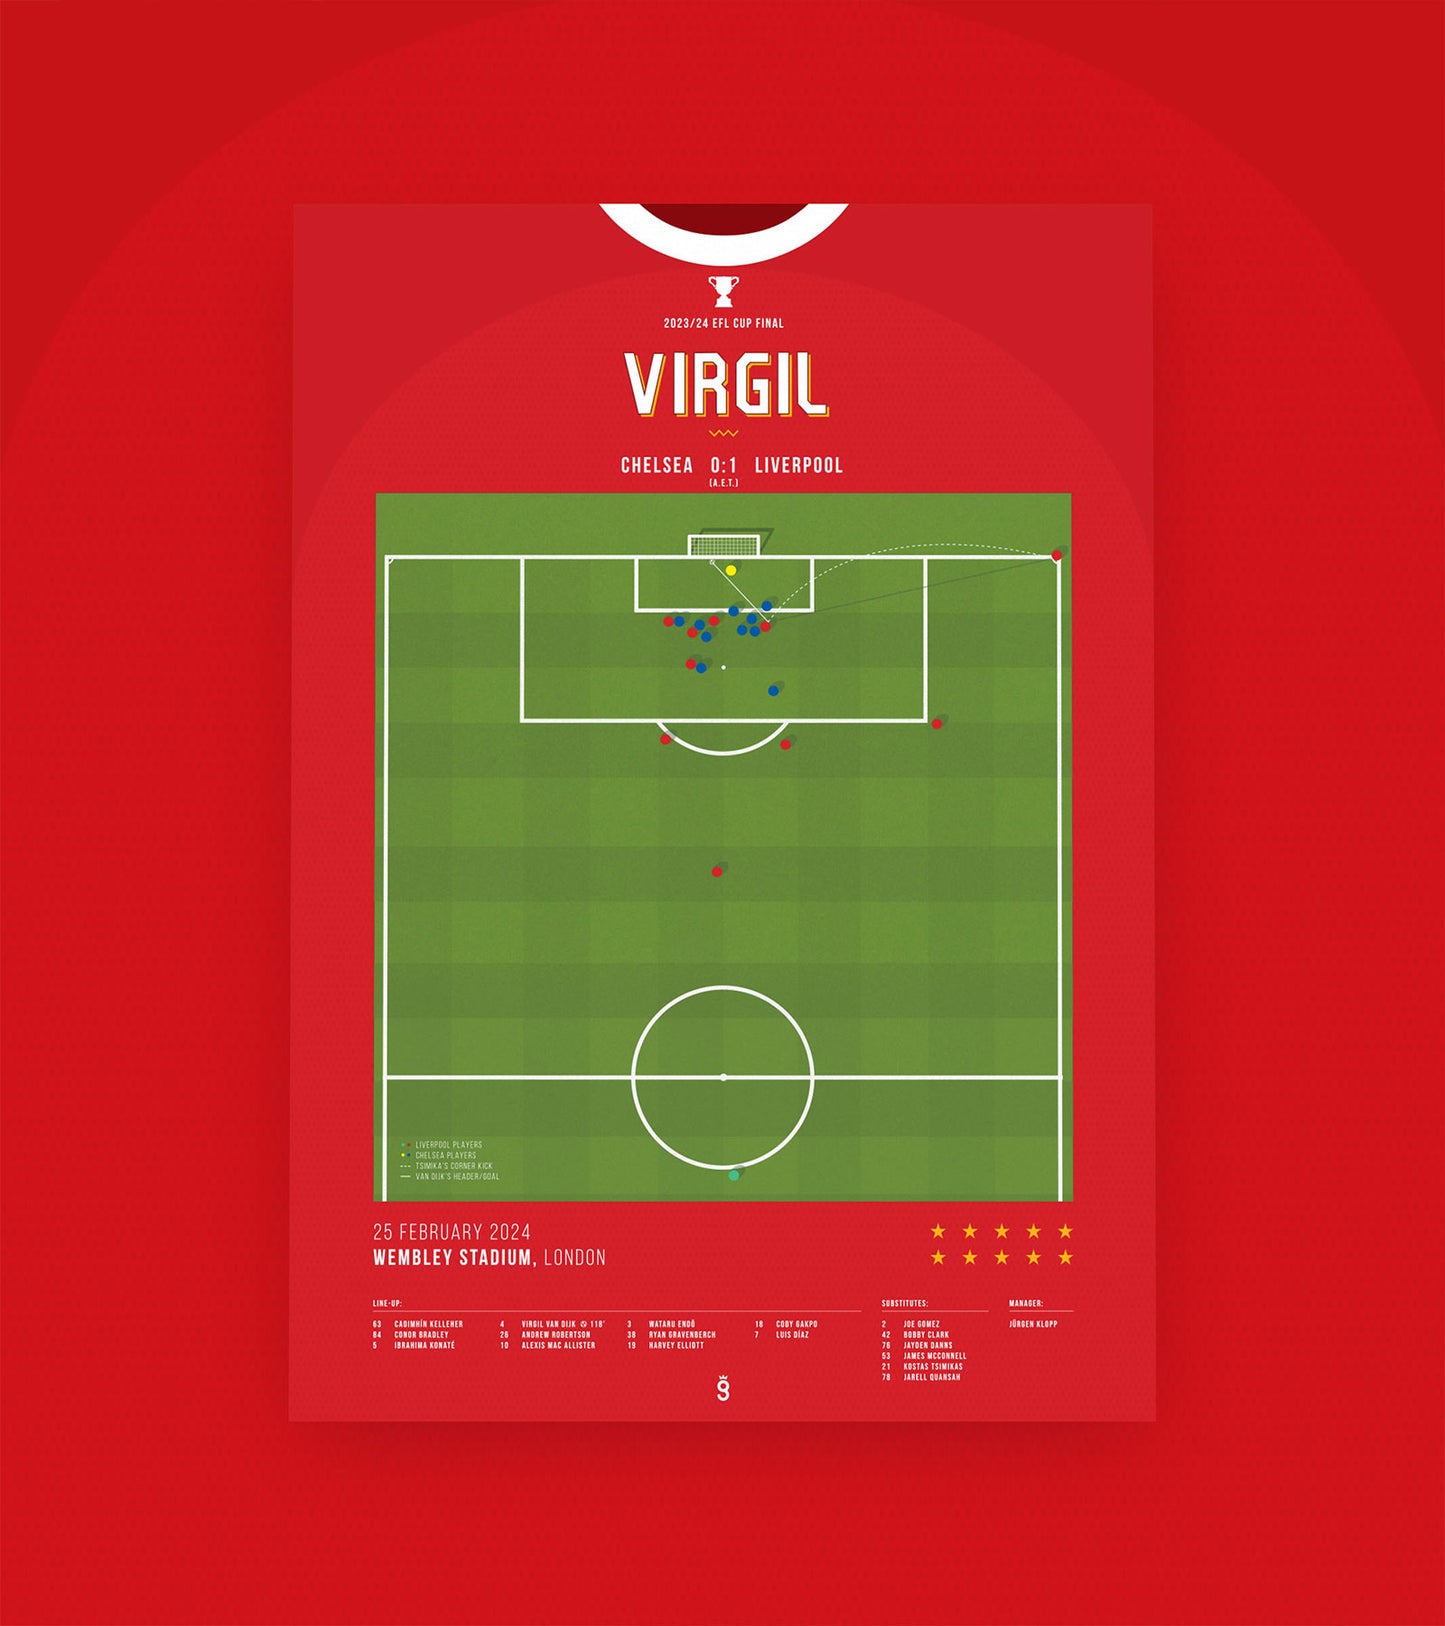 Virgil van Dijk goal wins the League Cup for Liverpool